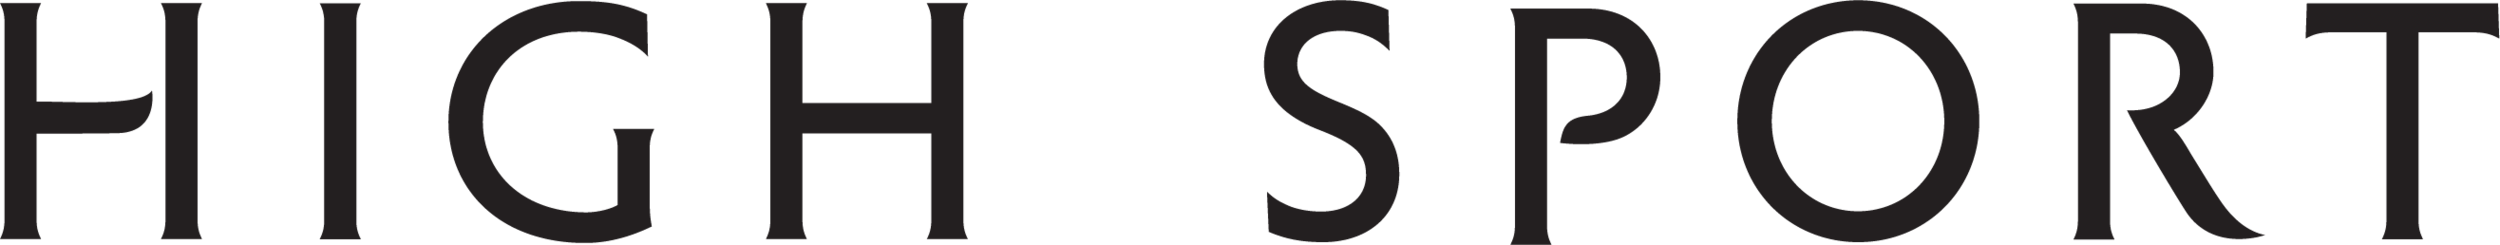 HS_logo[1].png